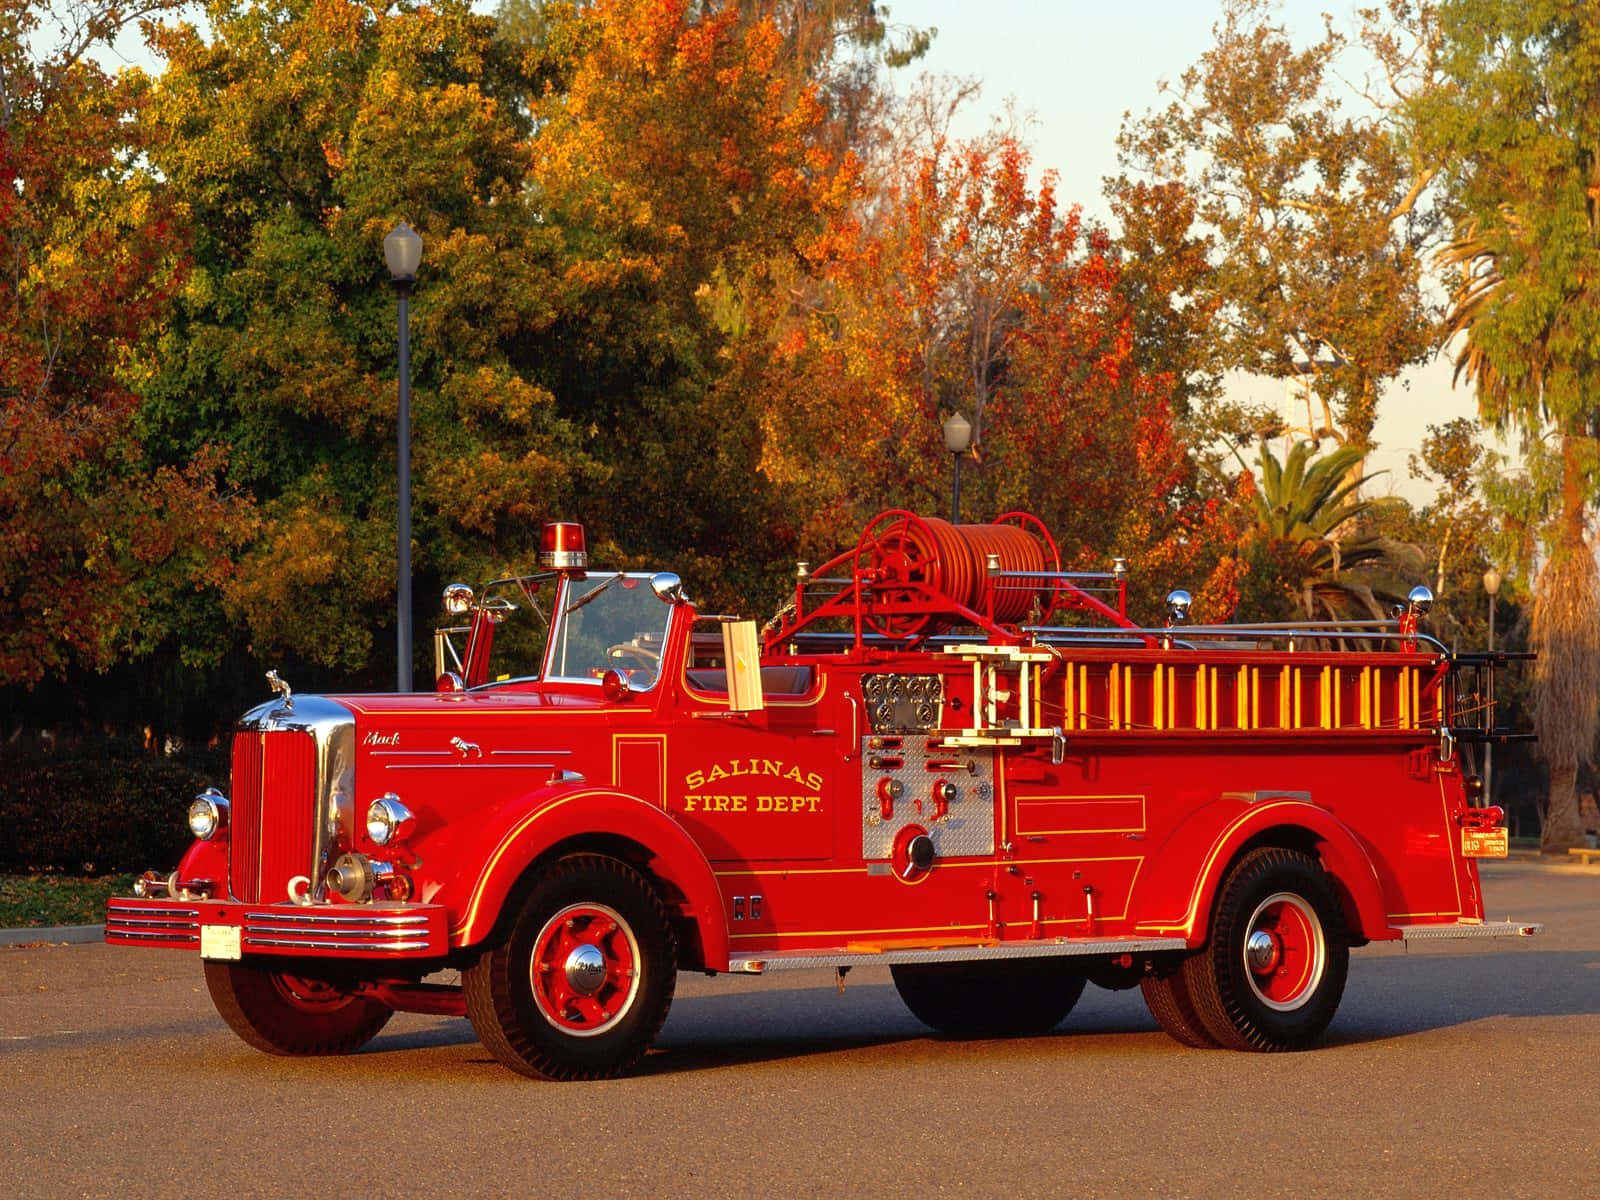 A Red Fire Truck